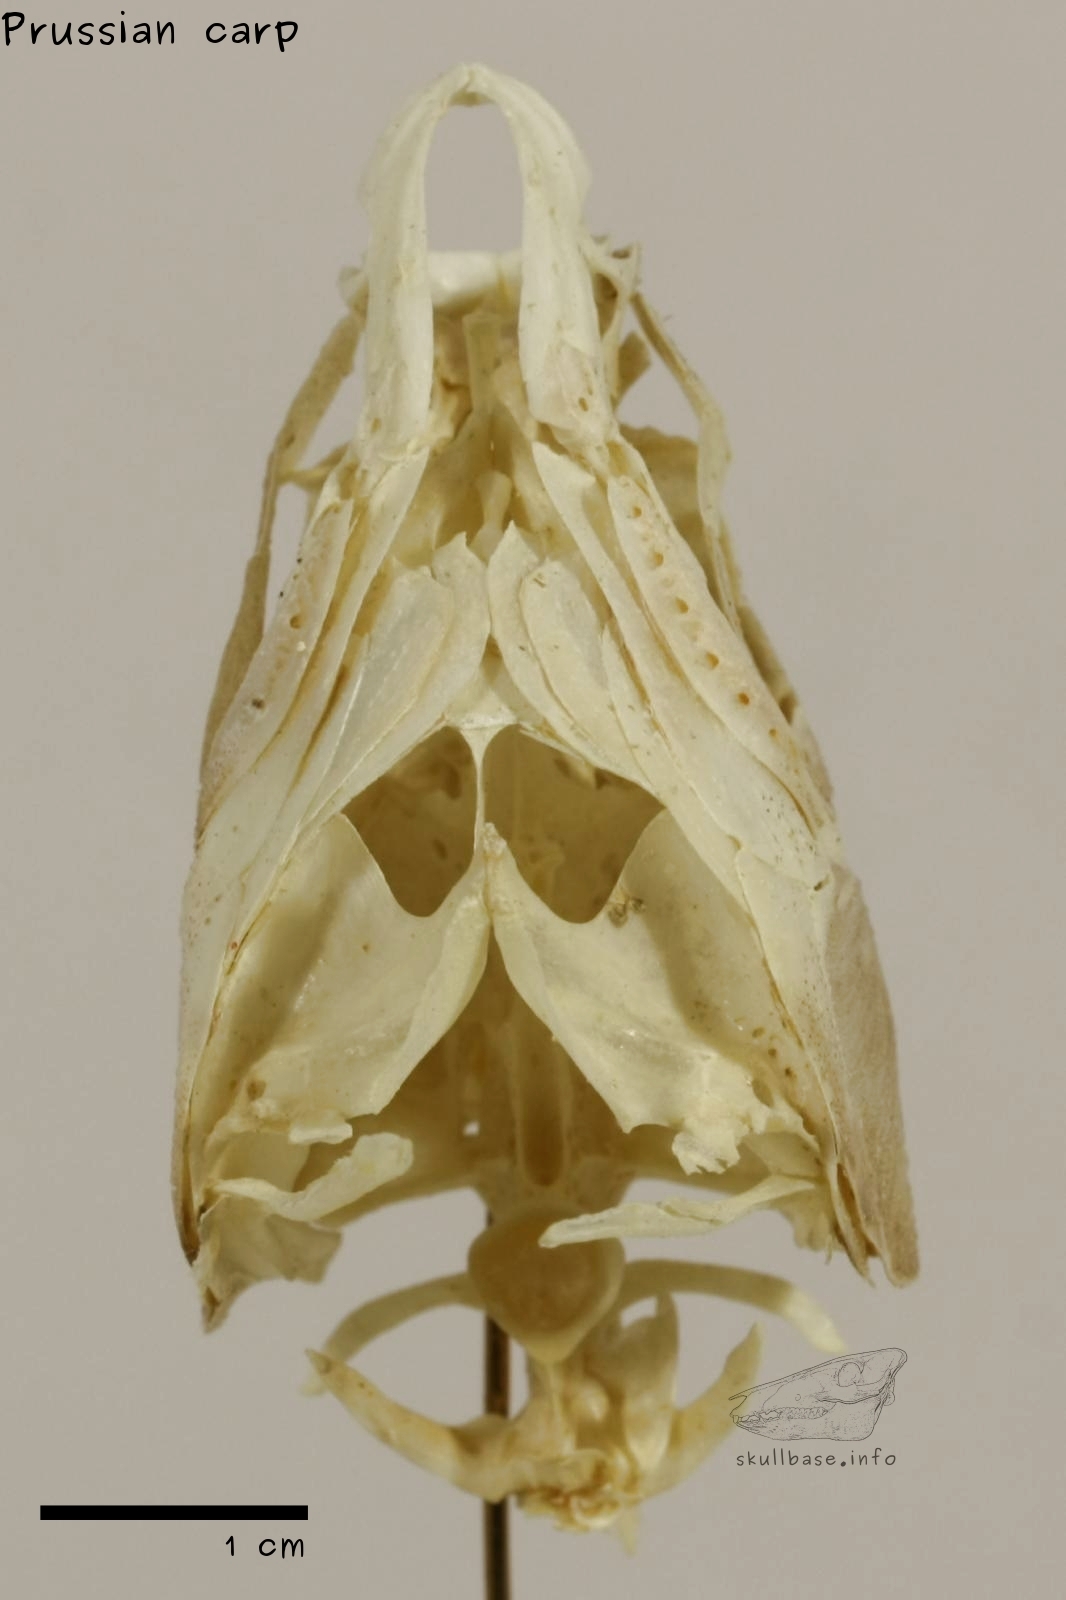 Prussian carp (Carassius gibelio) skull dorsal view